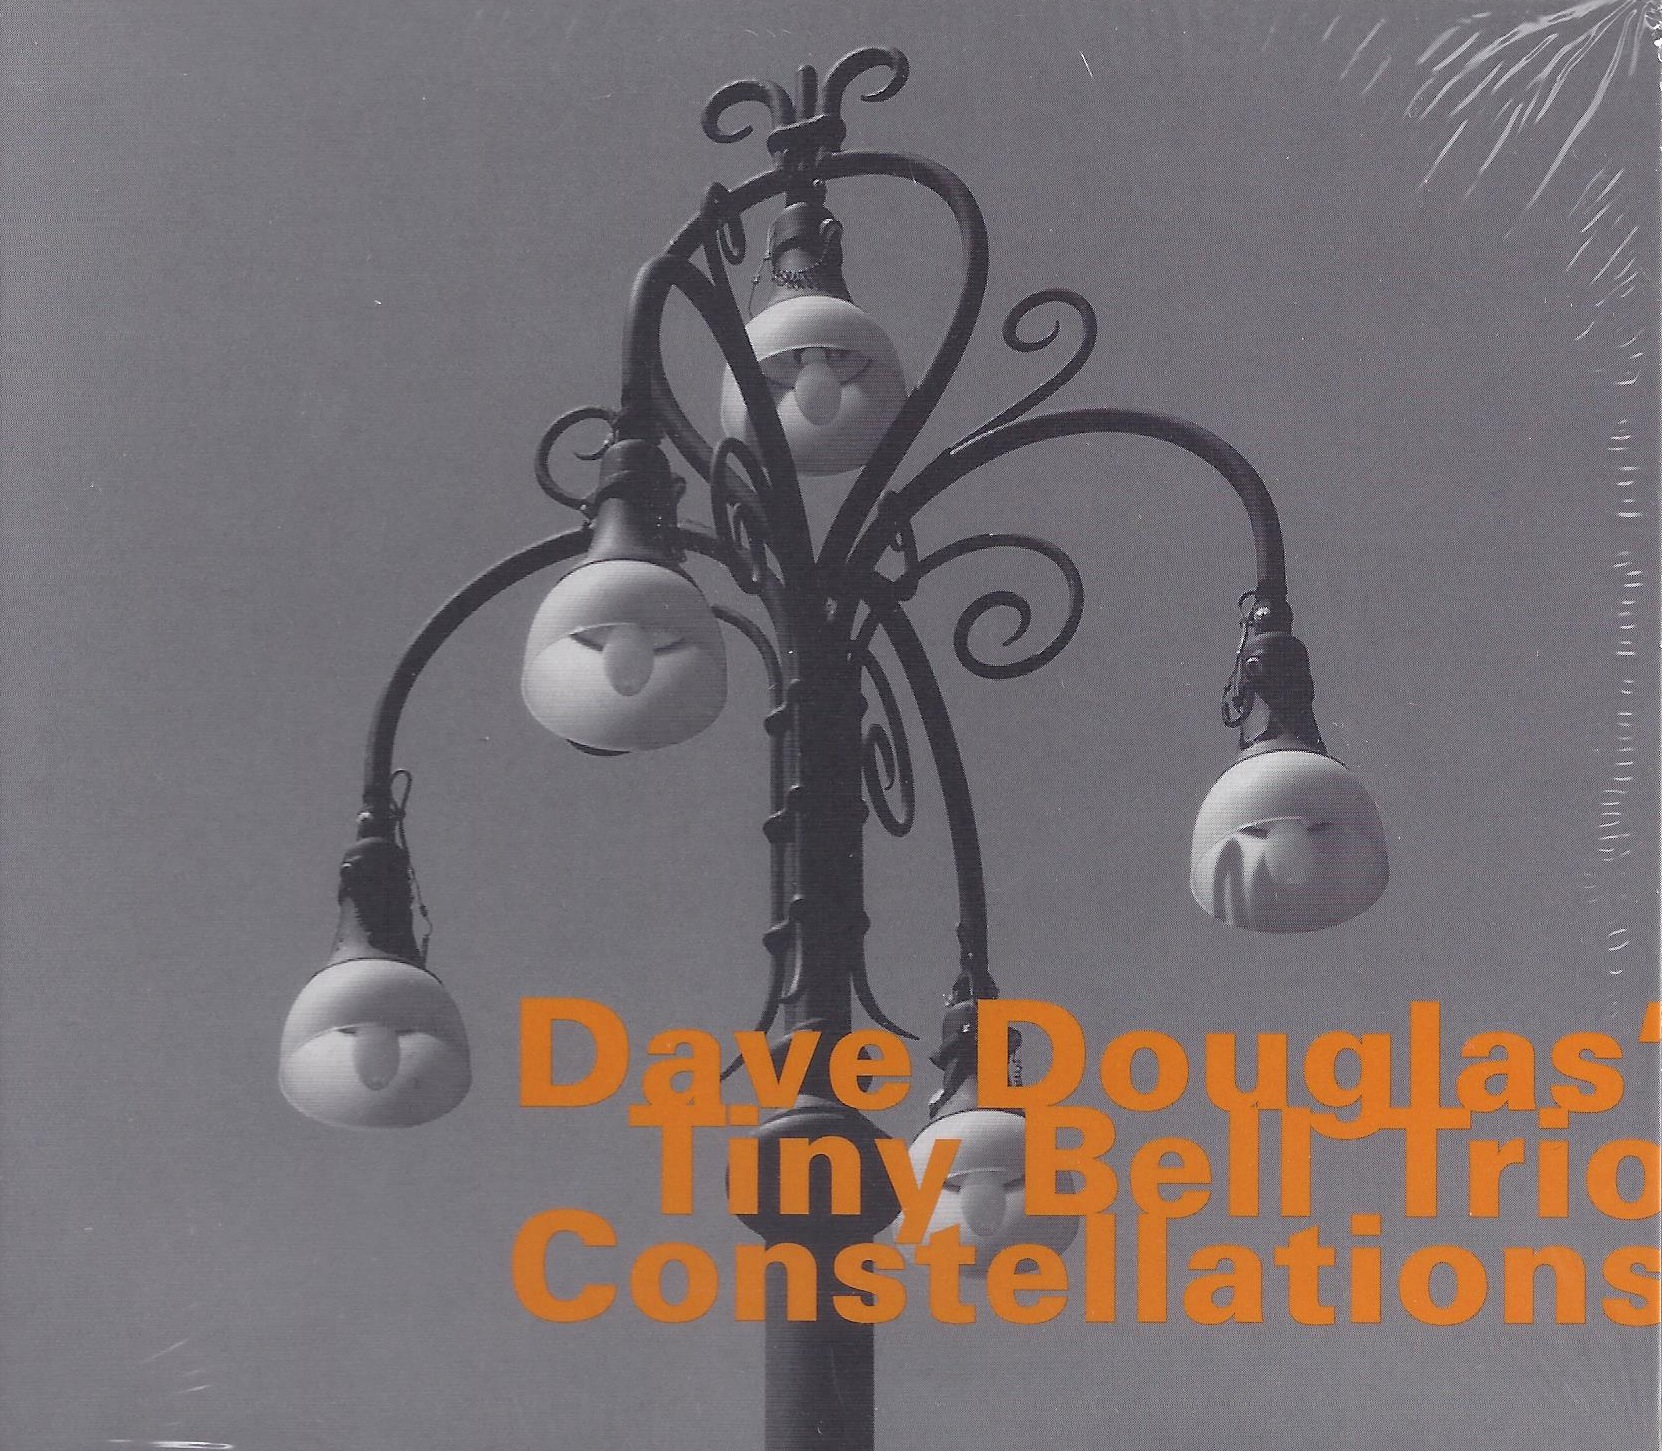 Dave Douglas' Tiny Bell Trio: Constellations